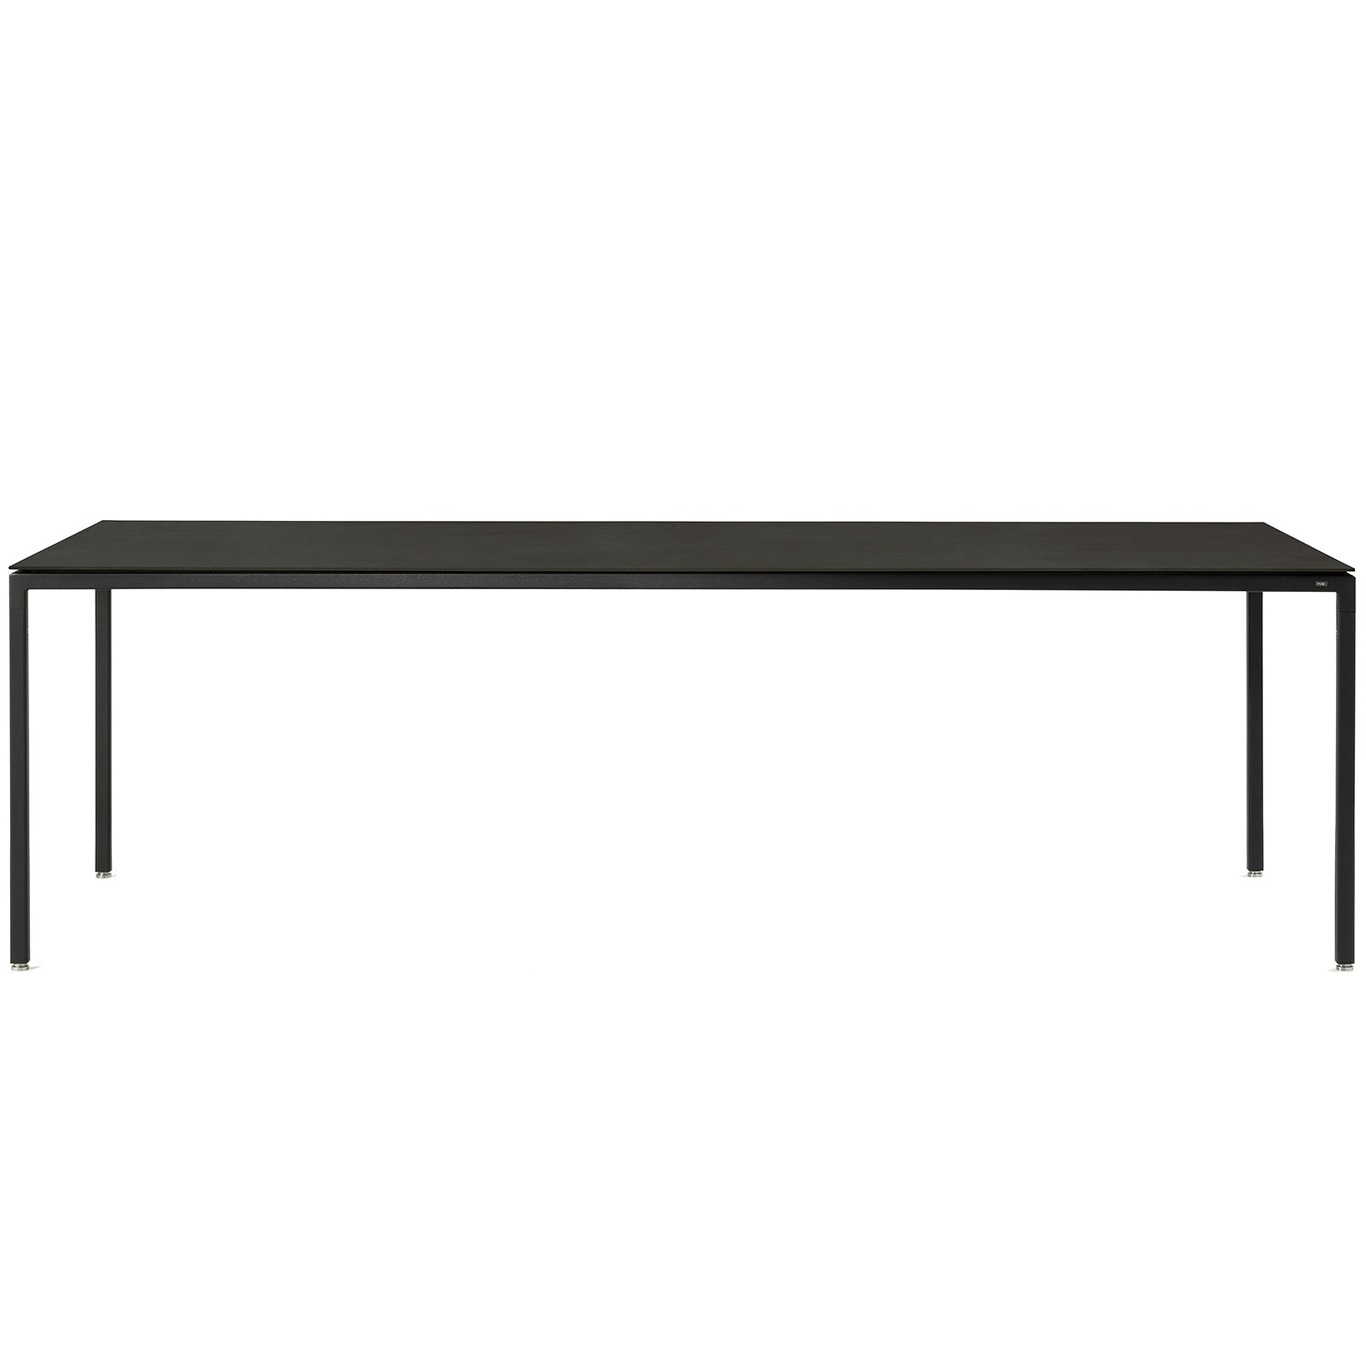 Vipp 972 Dining Table Large 95x240 cm, Black